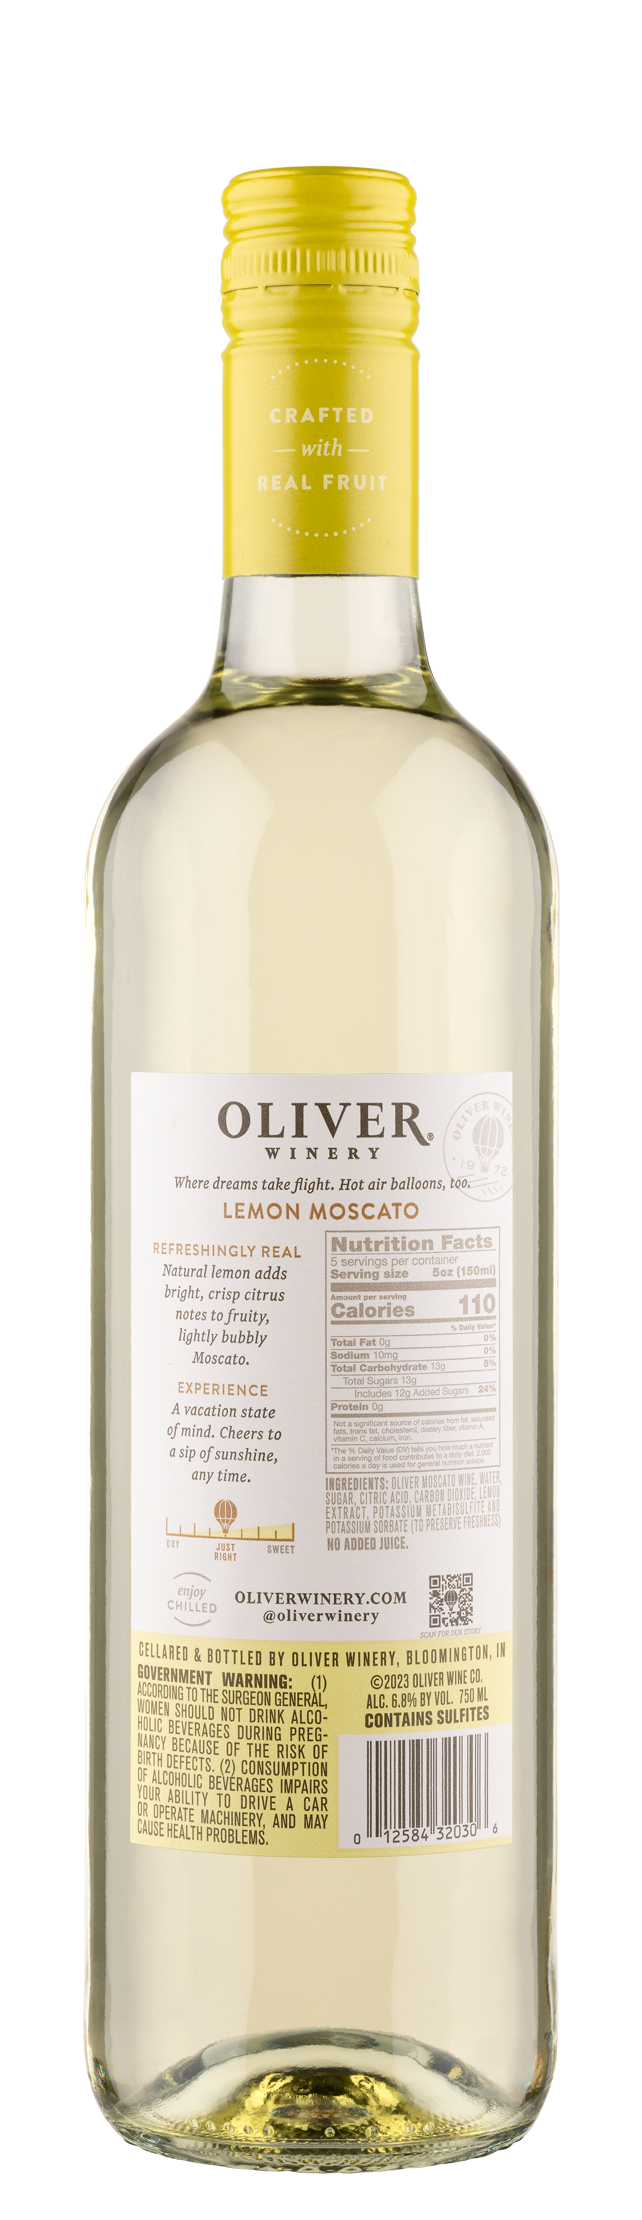 Oliver Winery Vine Series Lemon Moscato Nutrition Information